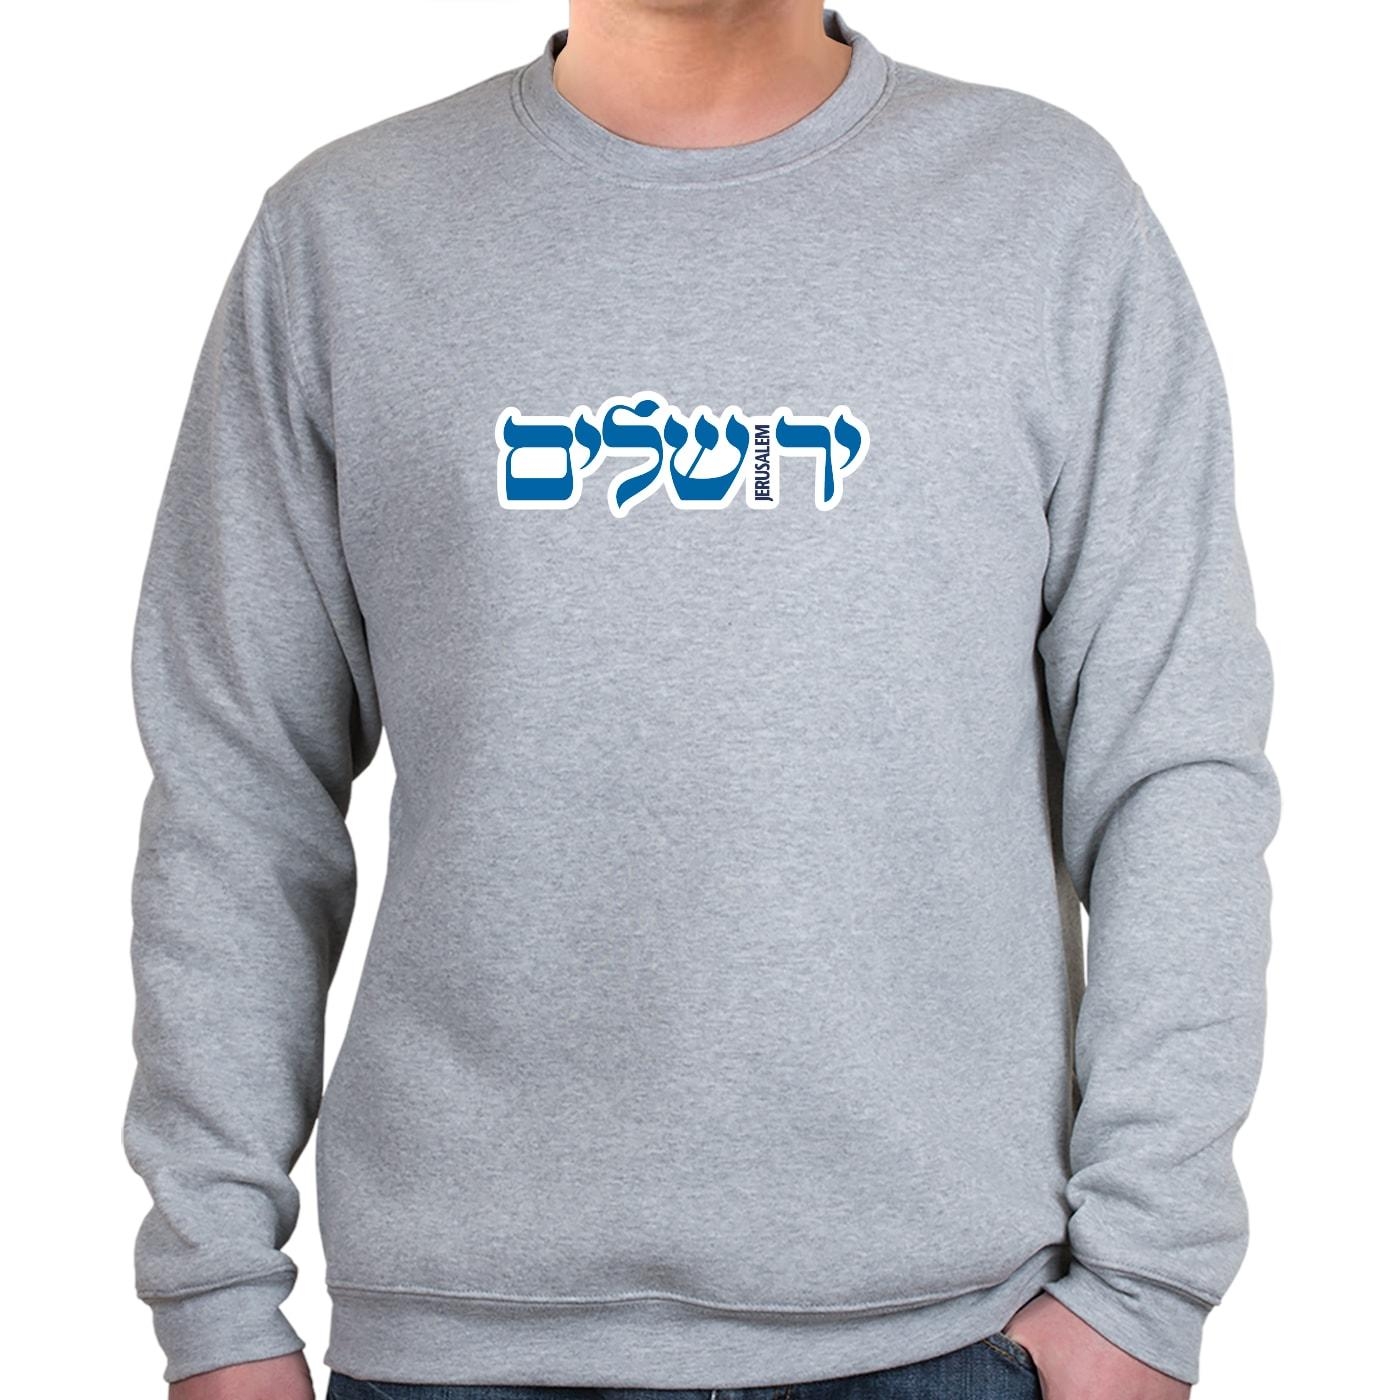 Jerusalem Sweatshirt - Bilingual. Variety of Colors  - 2